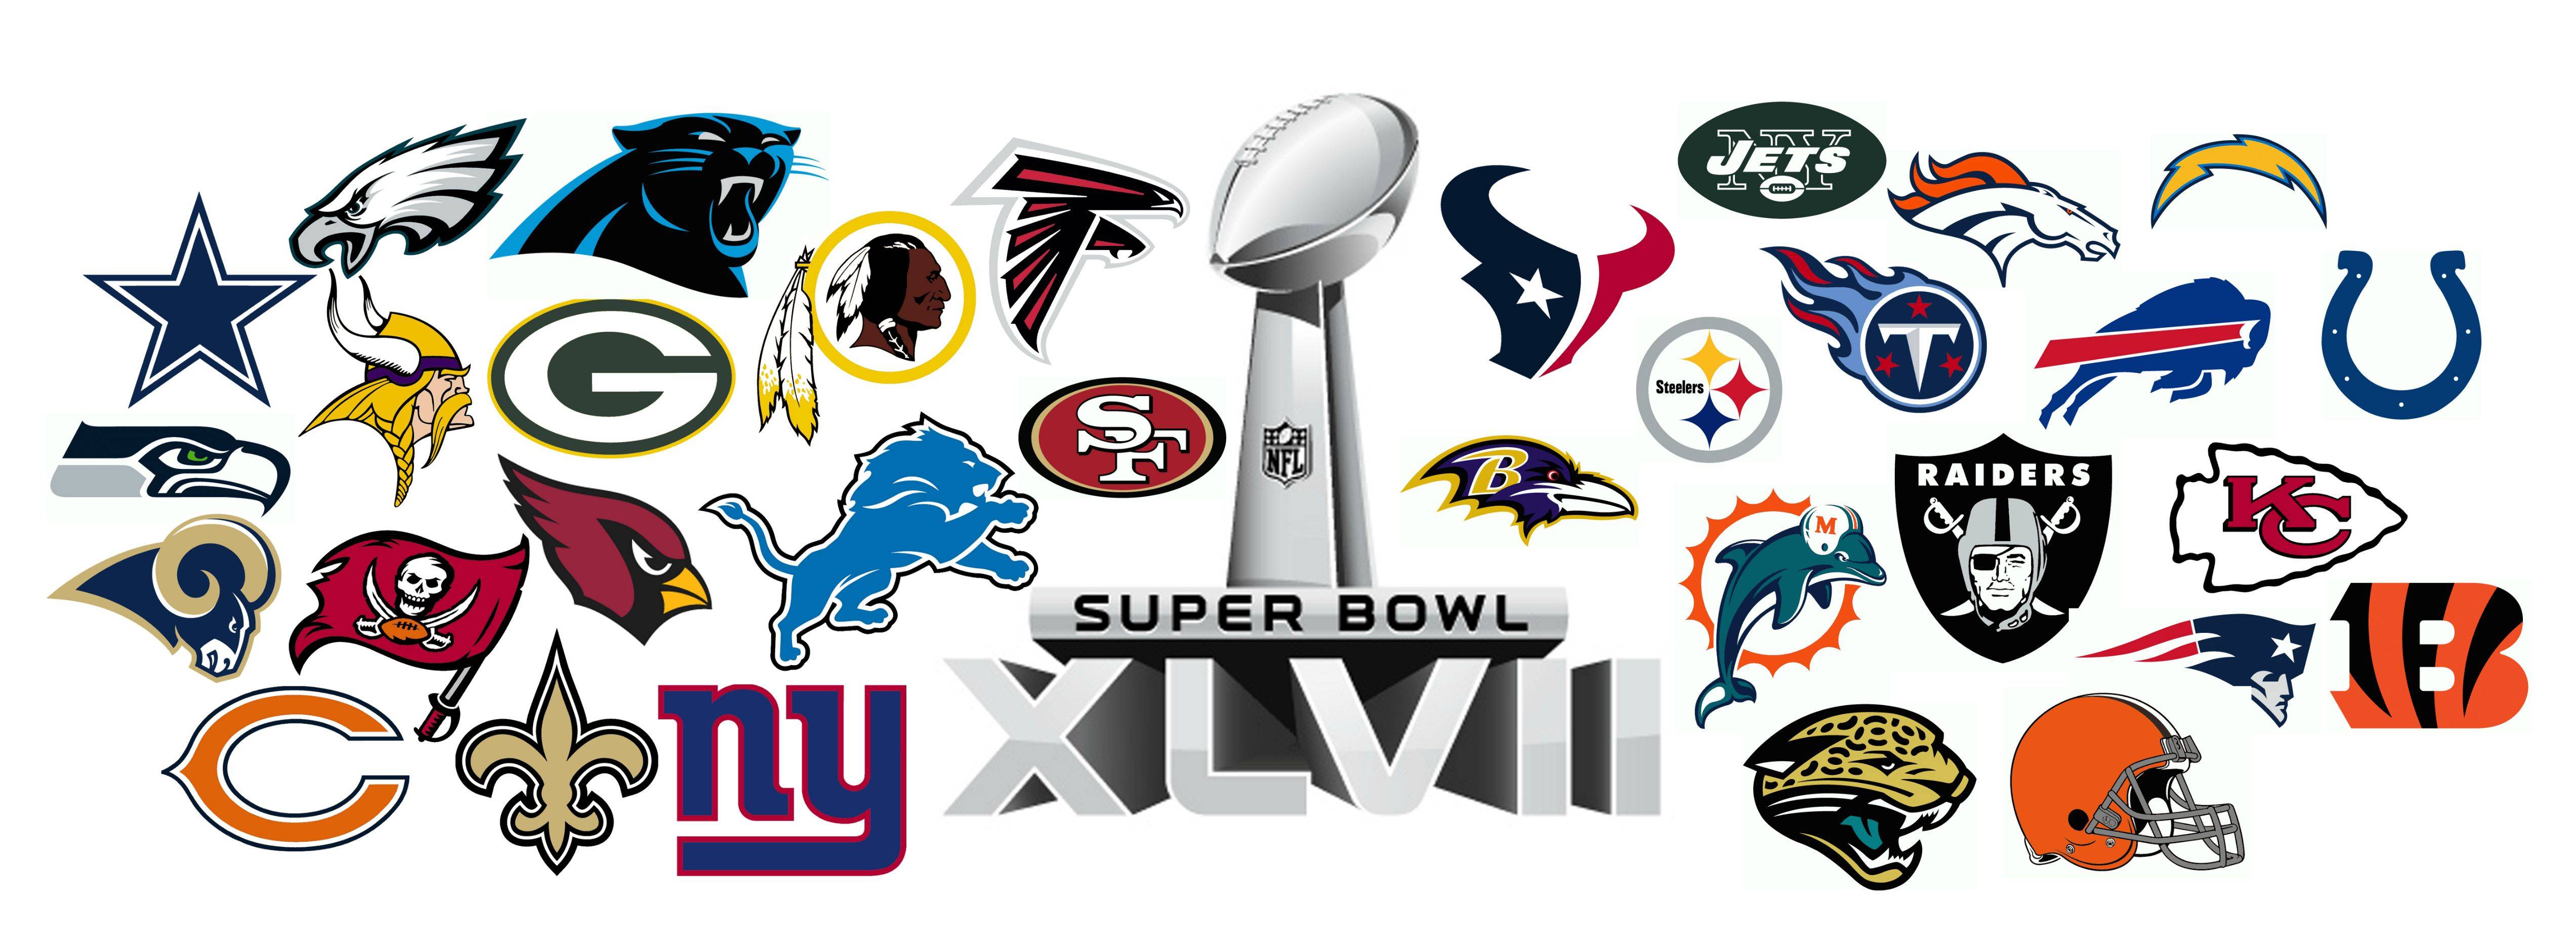 NFL American Football Logo - The Philadelphia Eagles logo is the only NFL team logo facing left ...